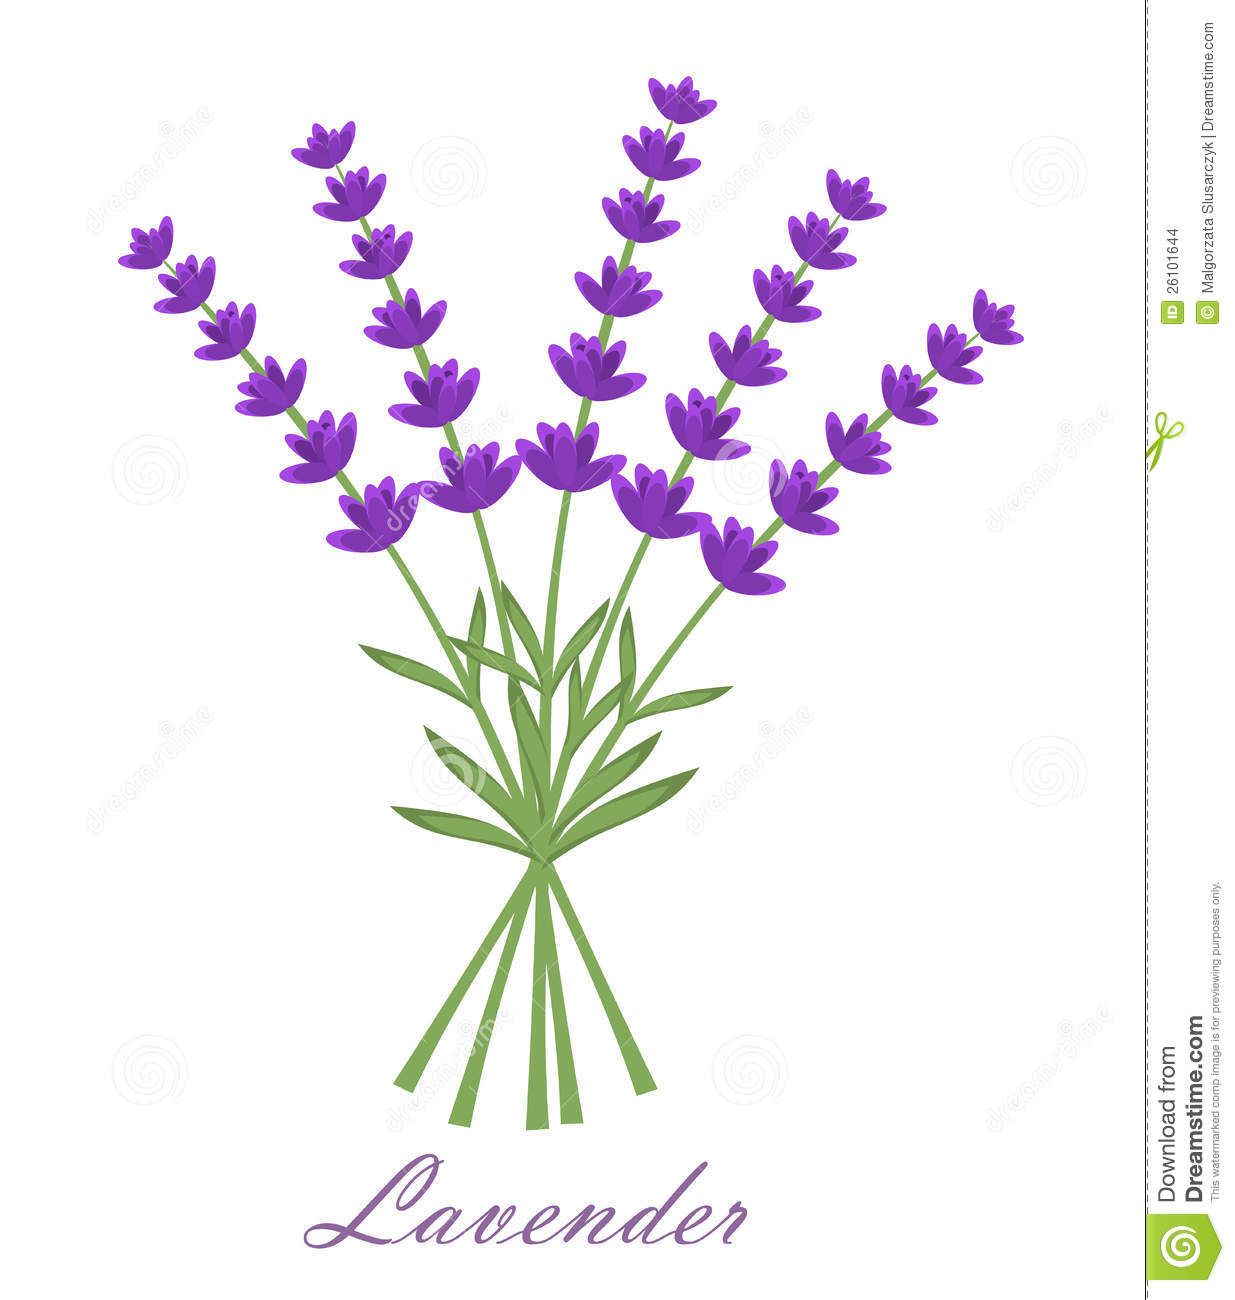 Free lavender clipart - .